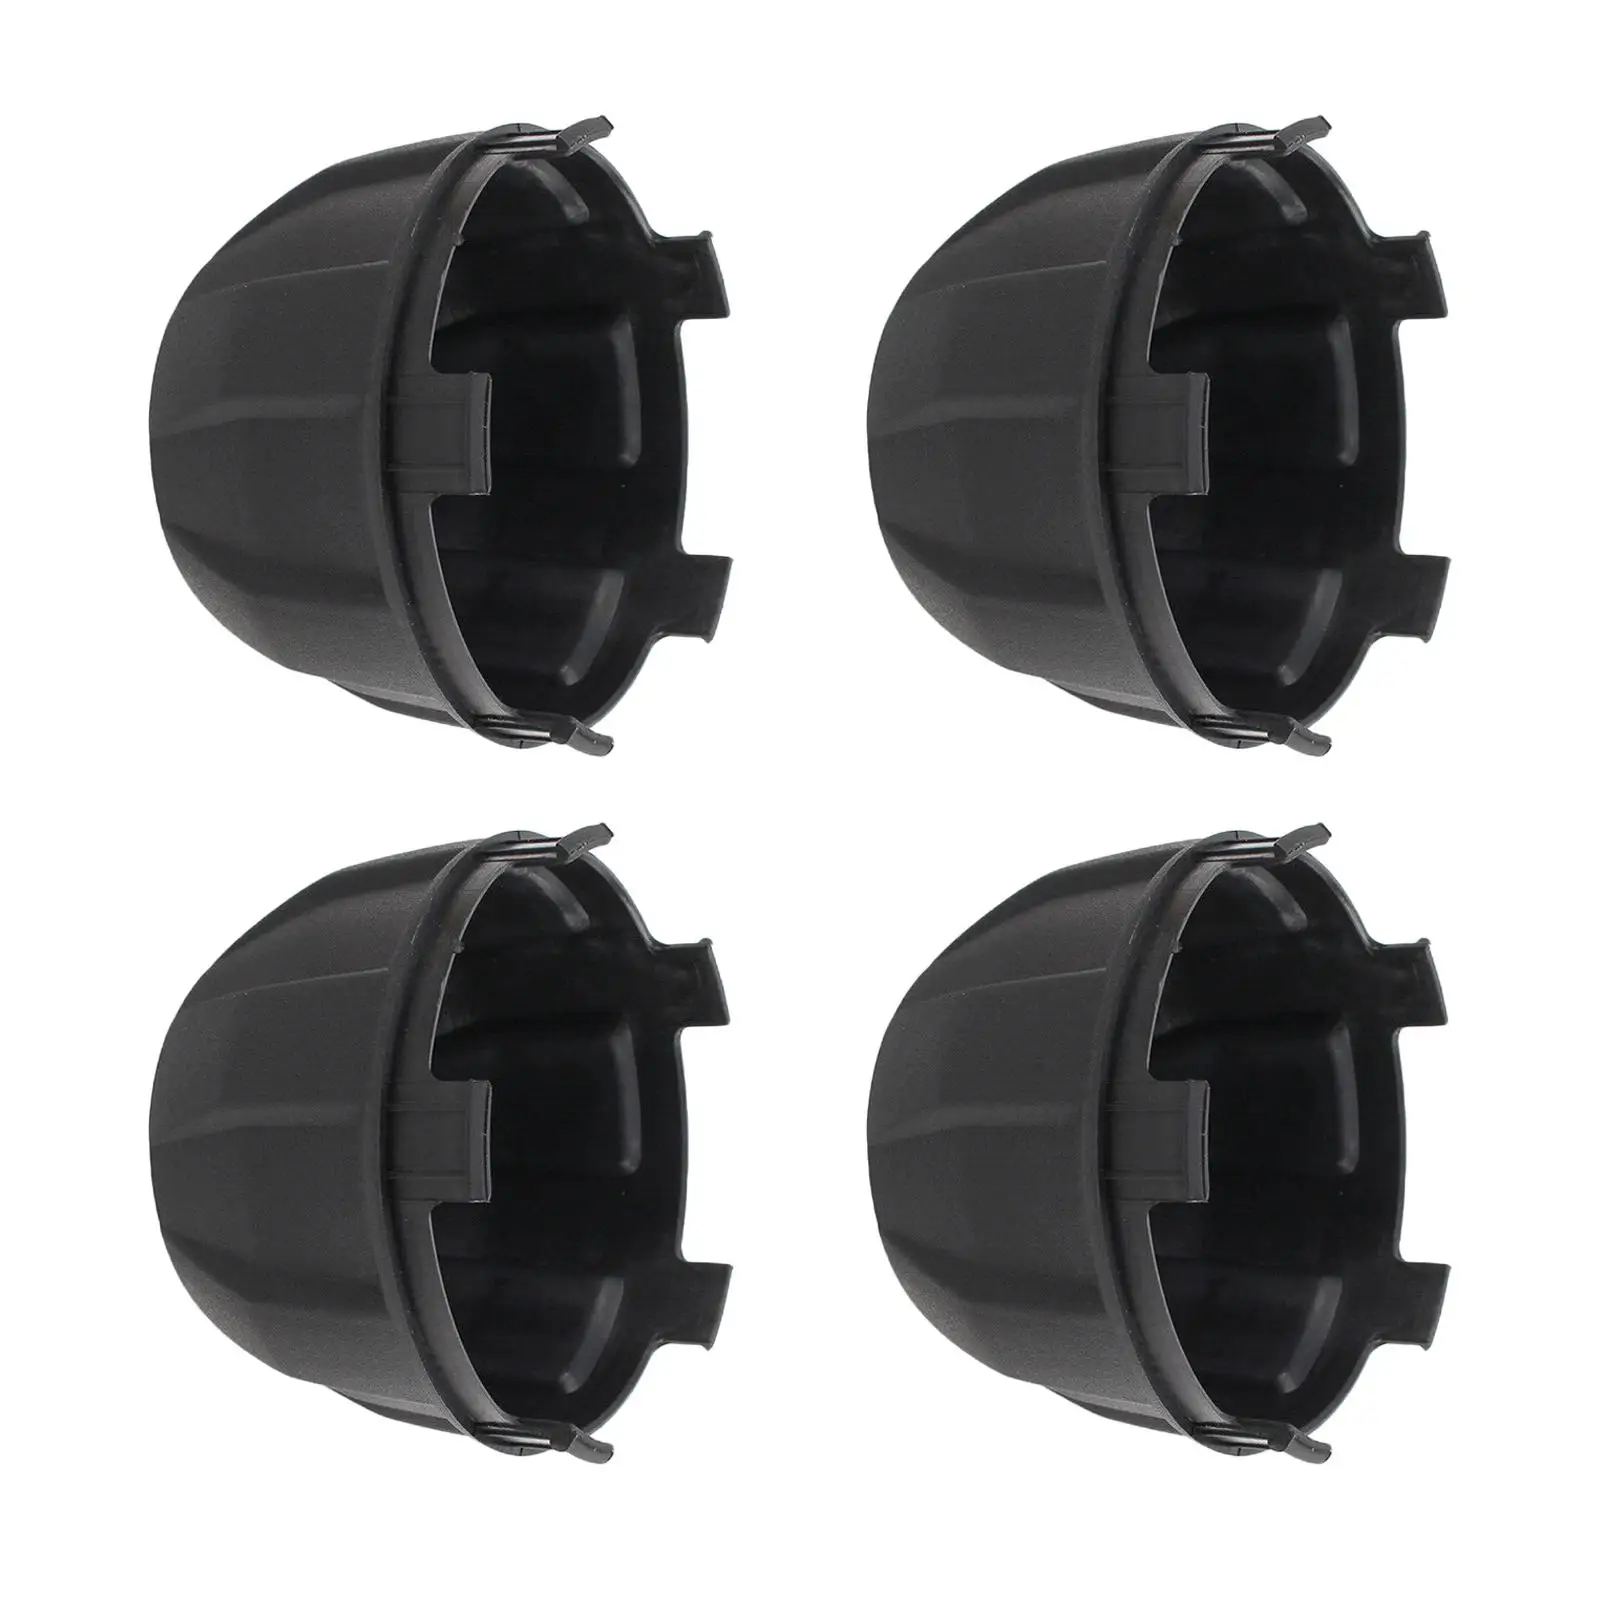 4x Tire Wheel Hub Caps Modification Motorcycle Black 11065-1341 for Teryx Krx